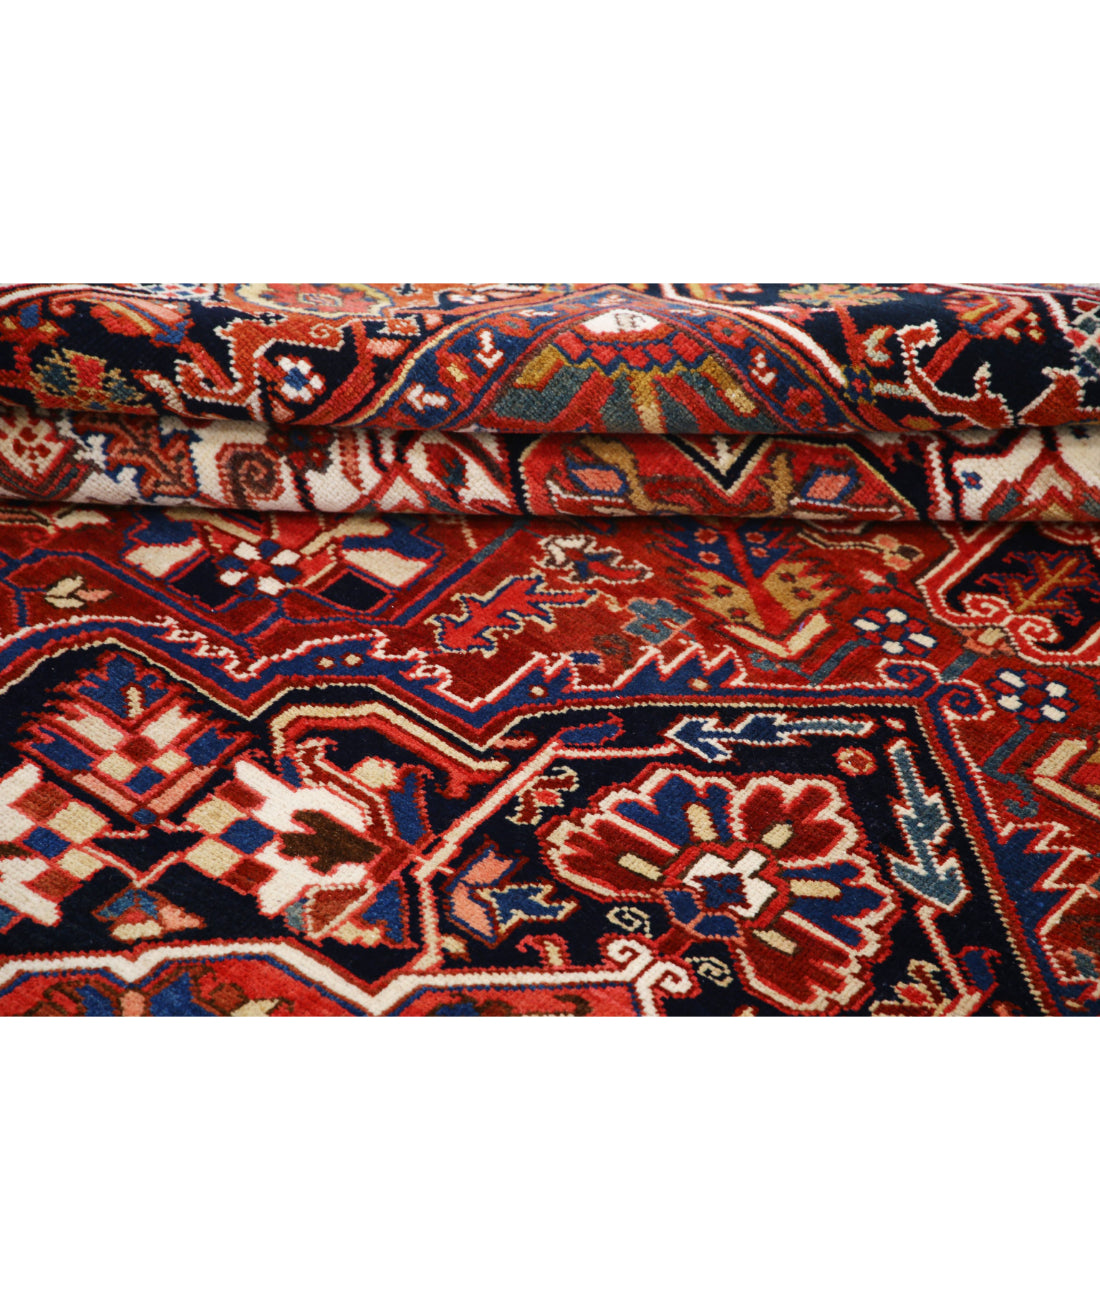 Hand Knotted Semi Antique Persian Heriz Wool Rug - 7'9'' x 11'4'' 7'9'' x 11'4'' (233 X 340) / Rust / Blue